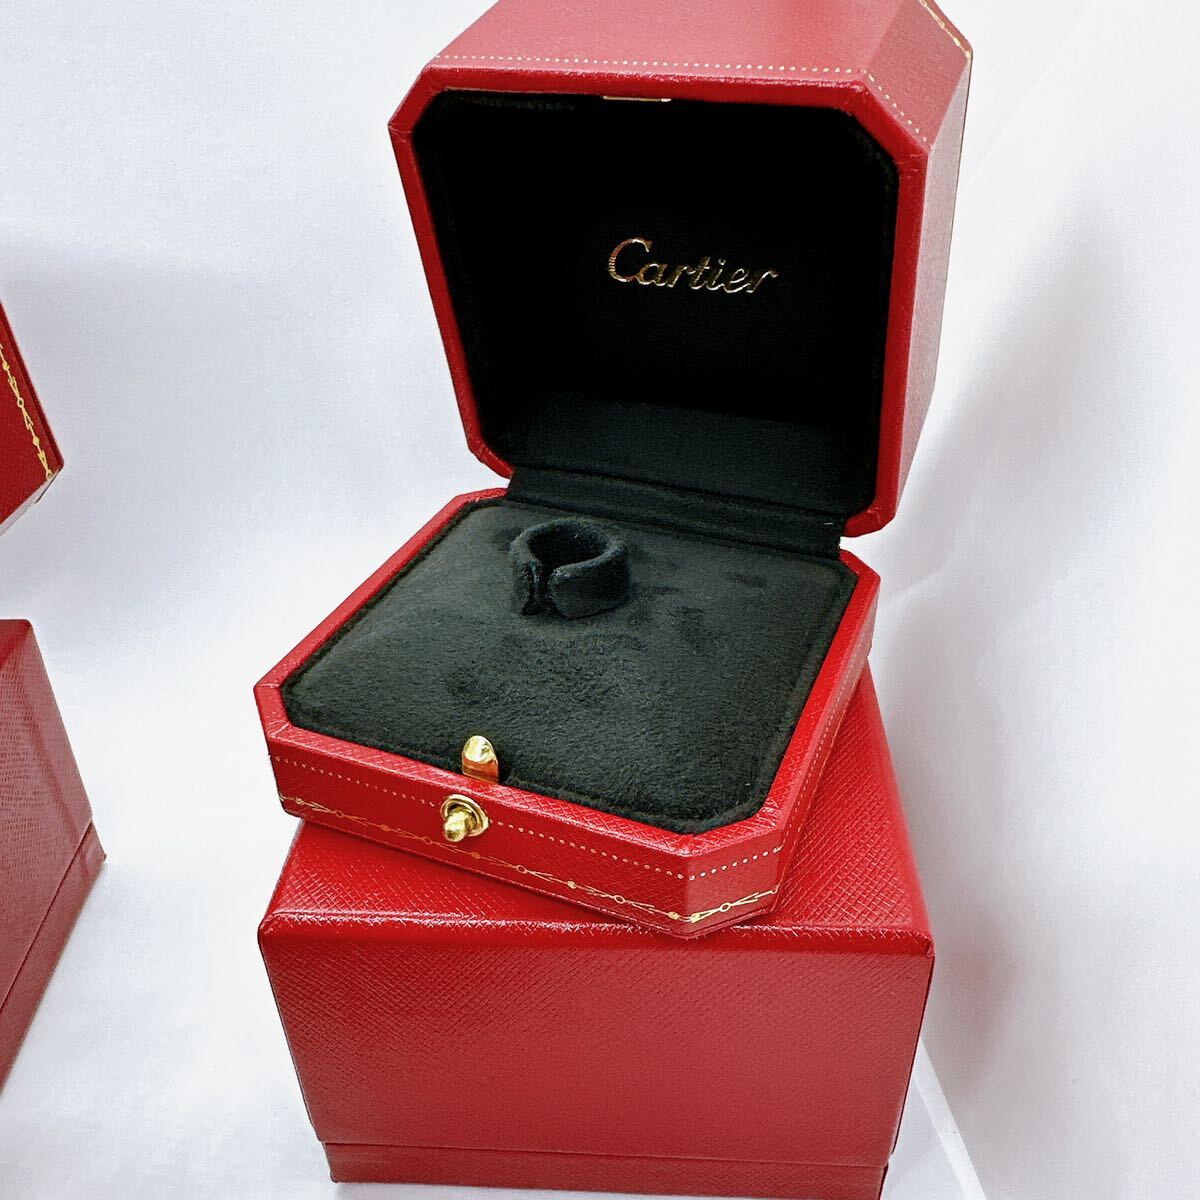 04087 ... Cartier  коробка  ... коробка   кейс   коробка   оригинальный   кольцо    кольцо   5 шт.   комплект  